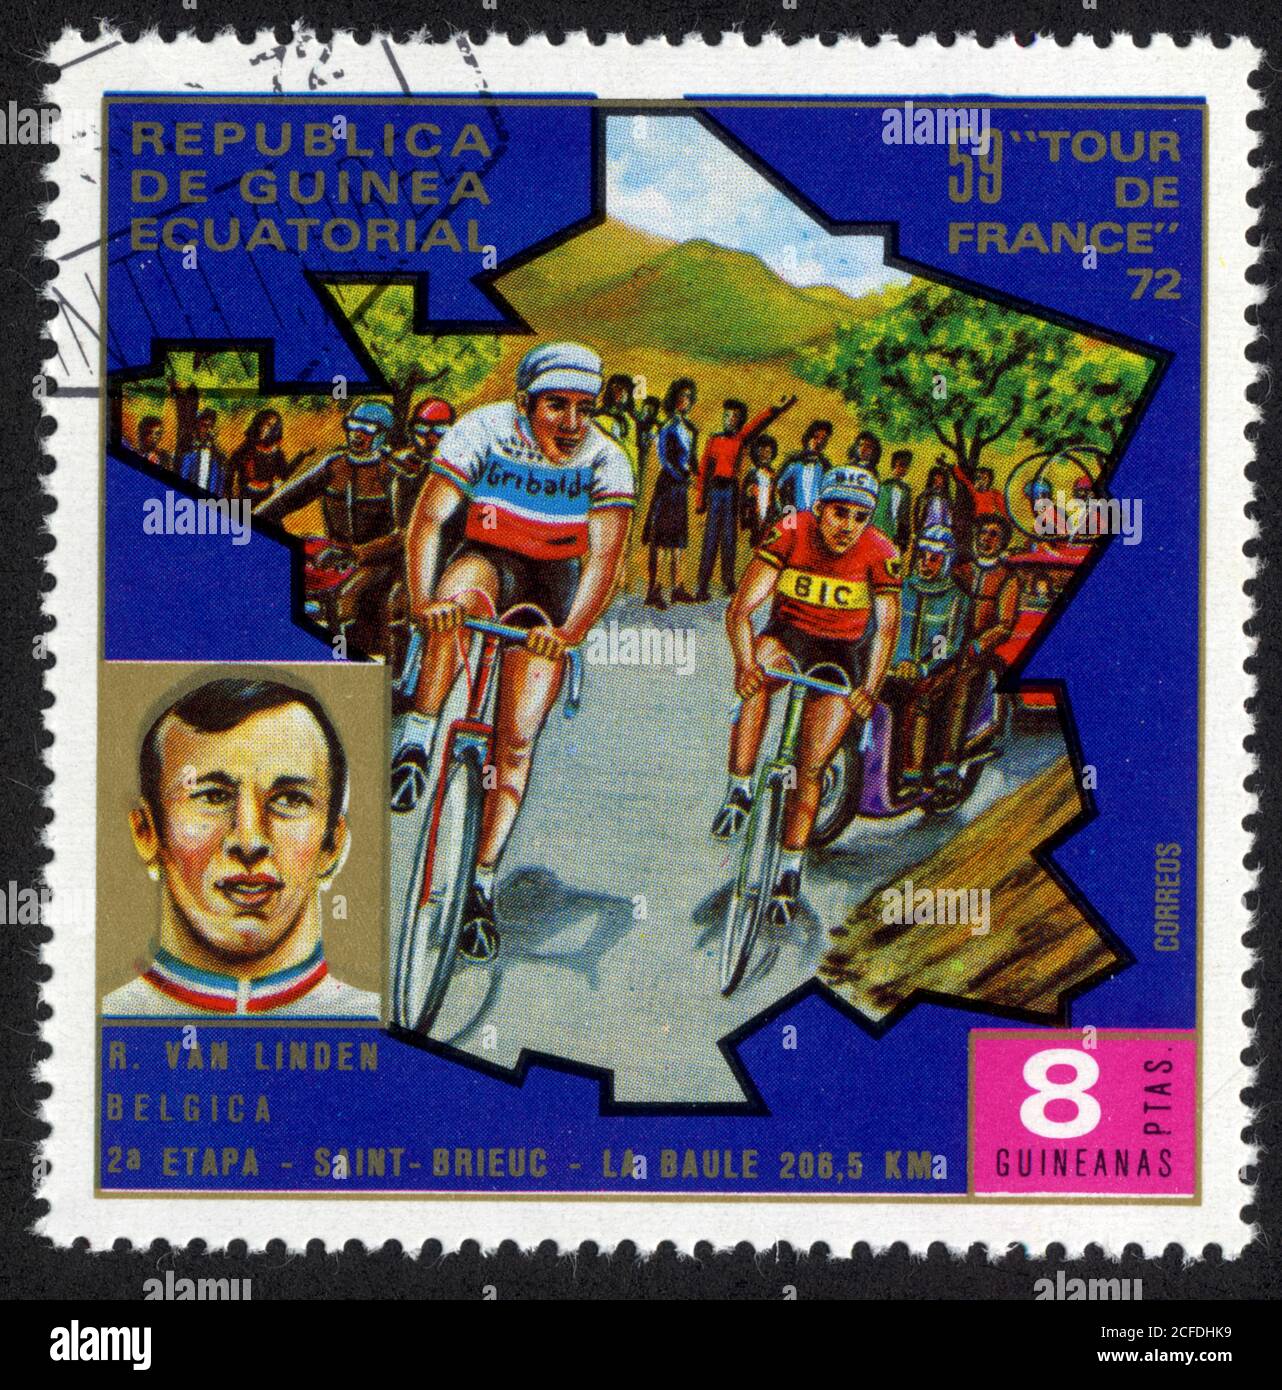 Timbre 59 Tour de France 72. Republica de Guinea Ecuatorial. Van Linden. Belgica. 2a atapa. Saint Brieuc.la Baule.206,5 km.8 Guineanas Ptas. Correos Foto Stock